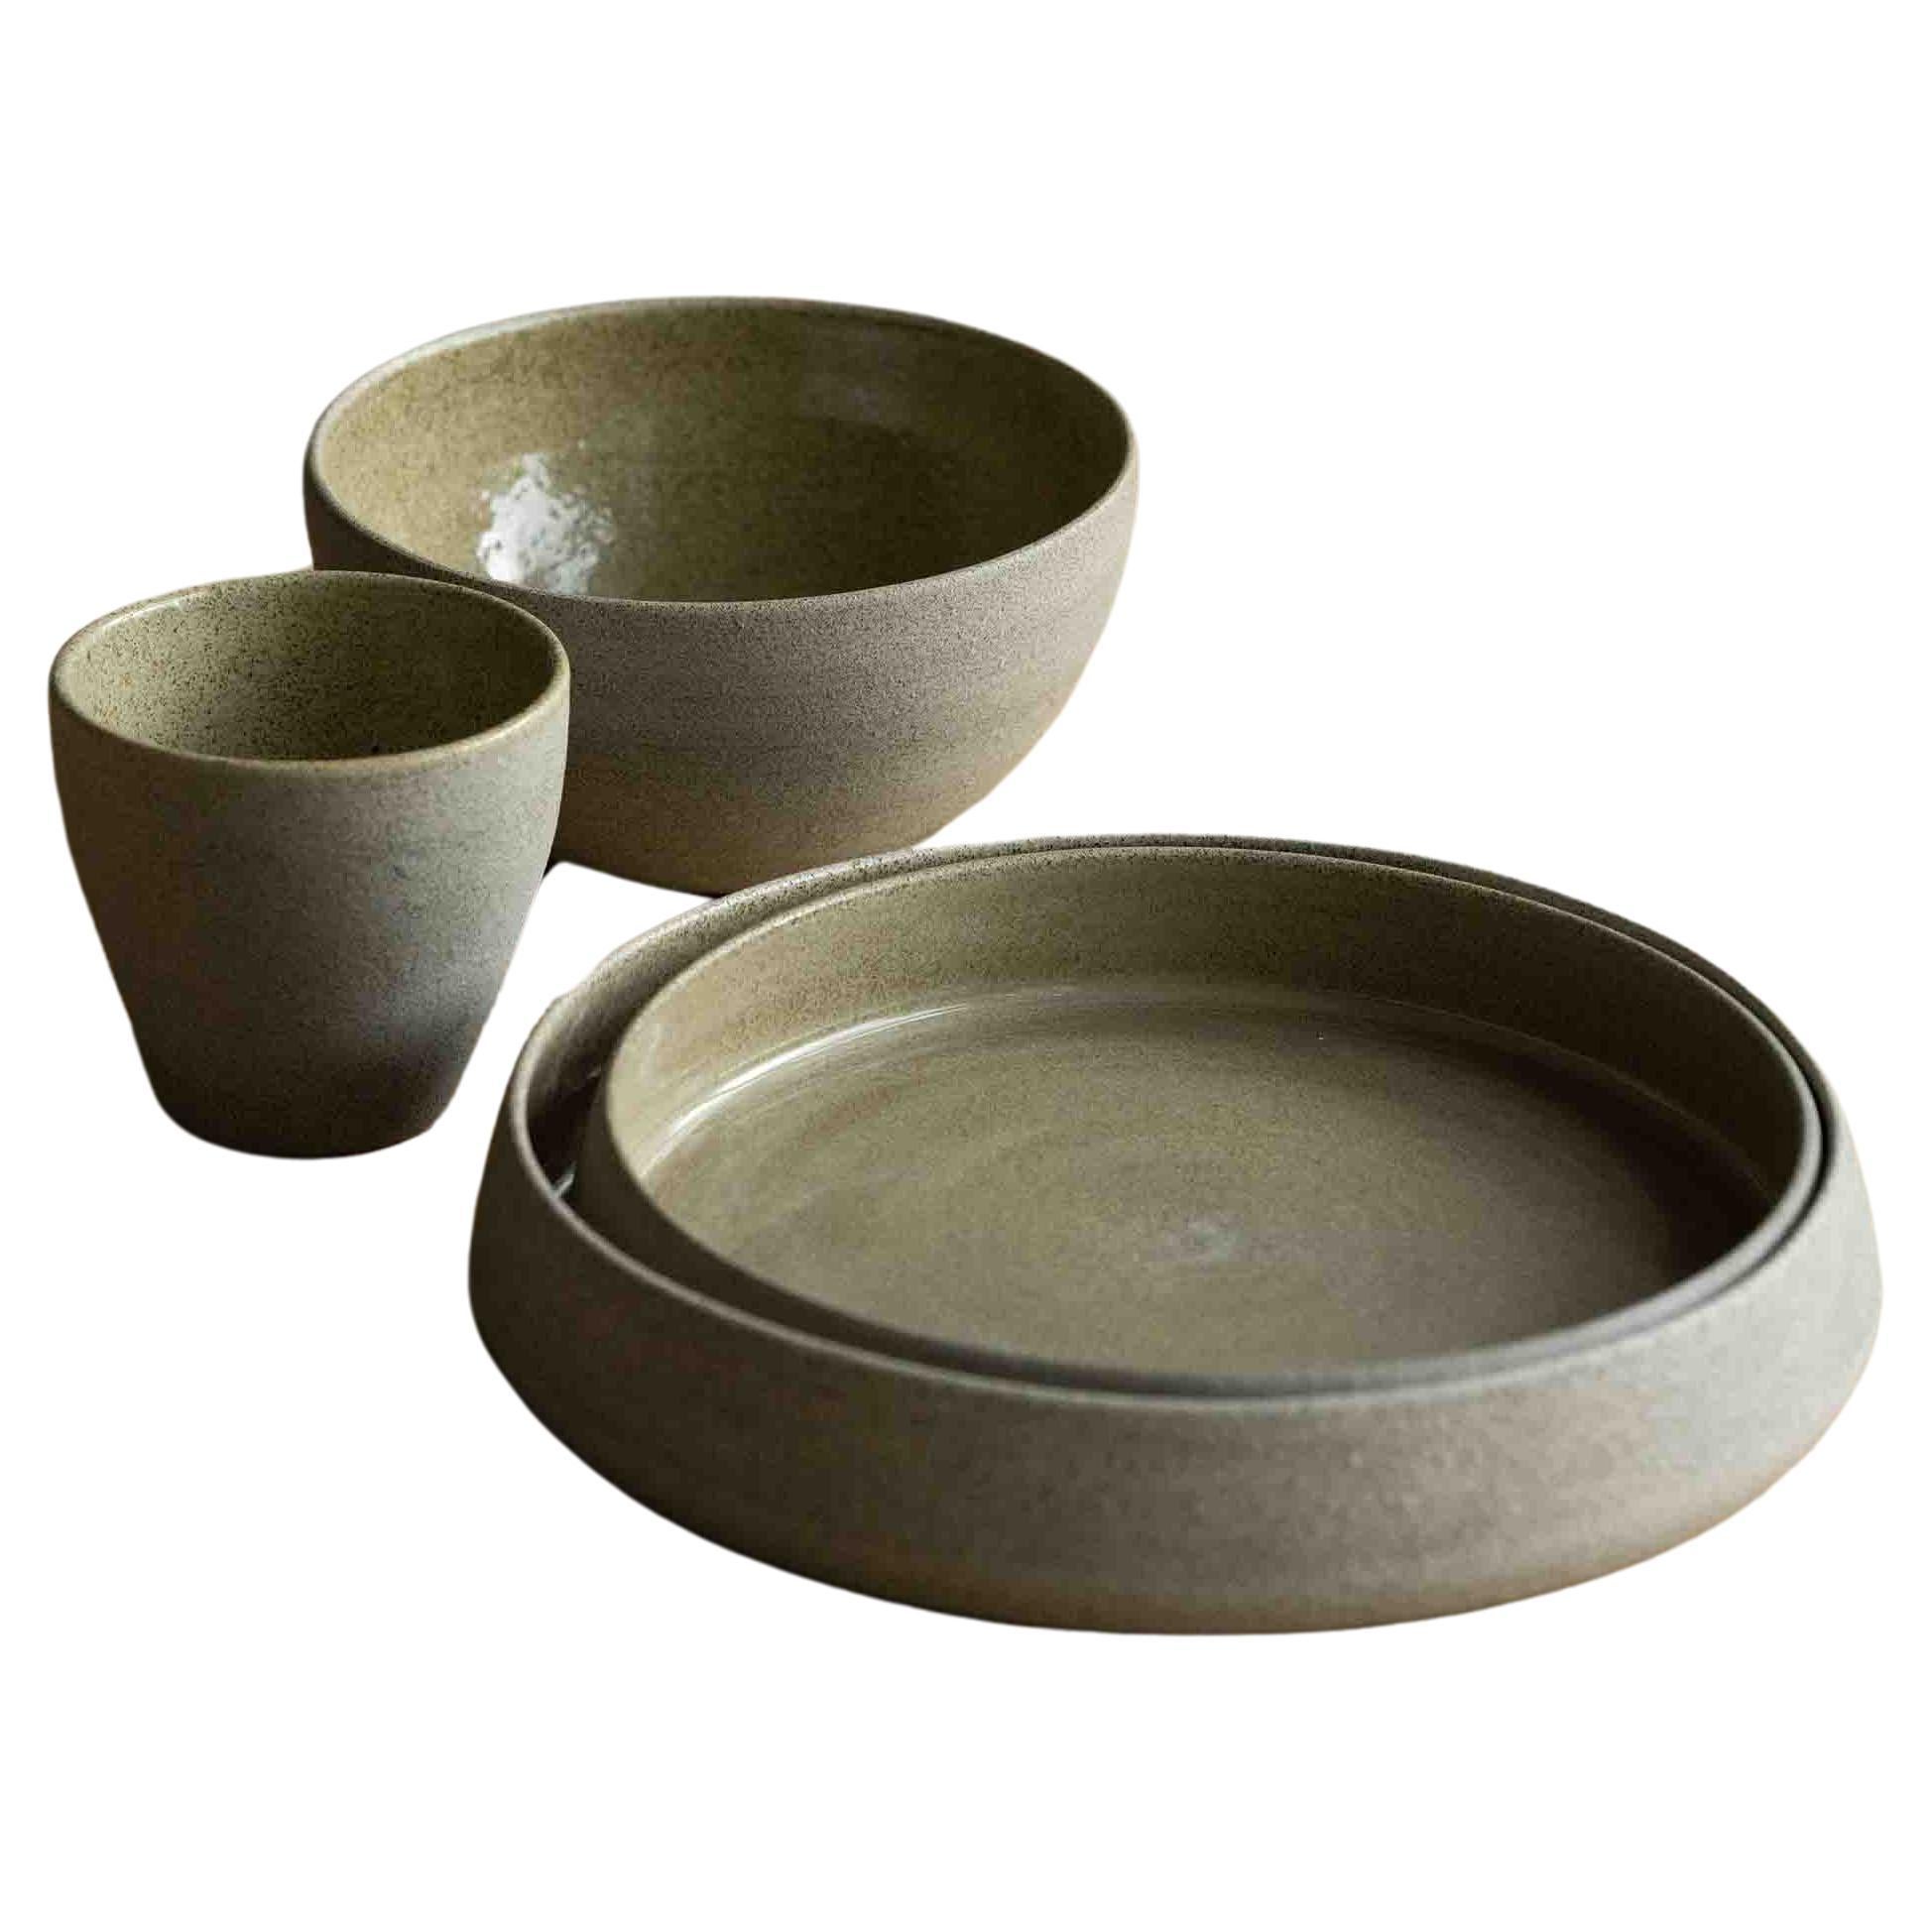 Handmade Stoneware Dinner Set "Concrete" For Sale